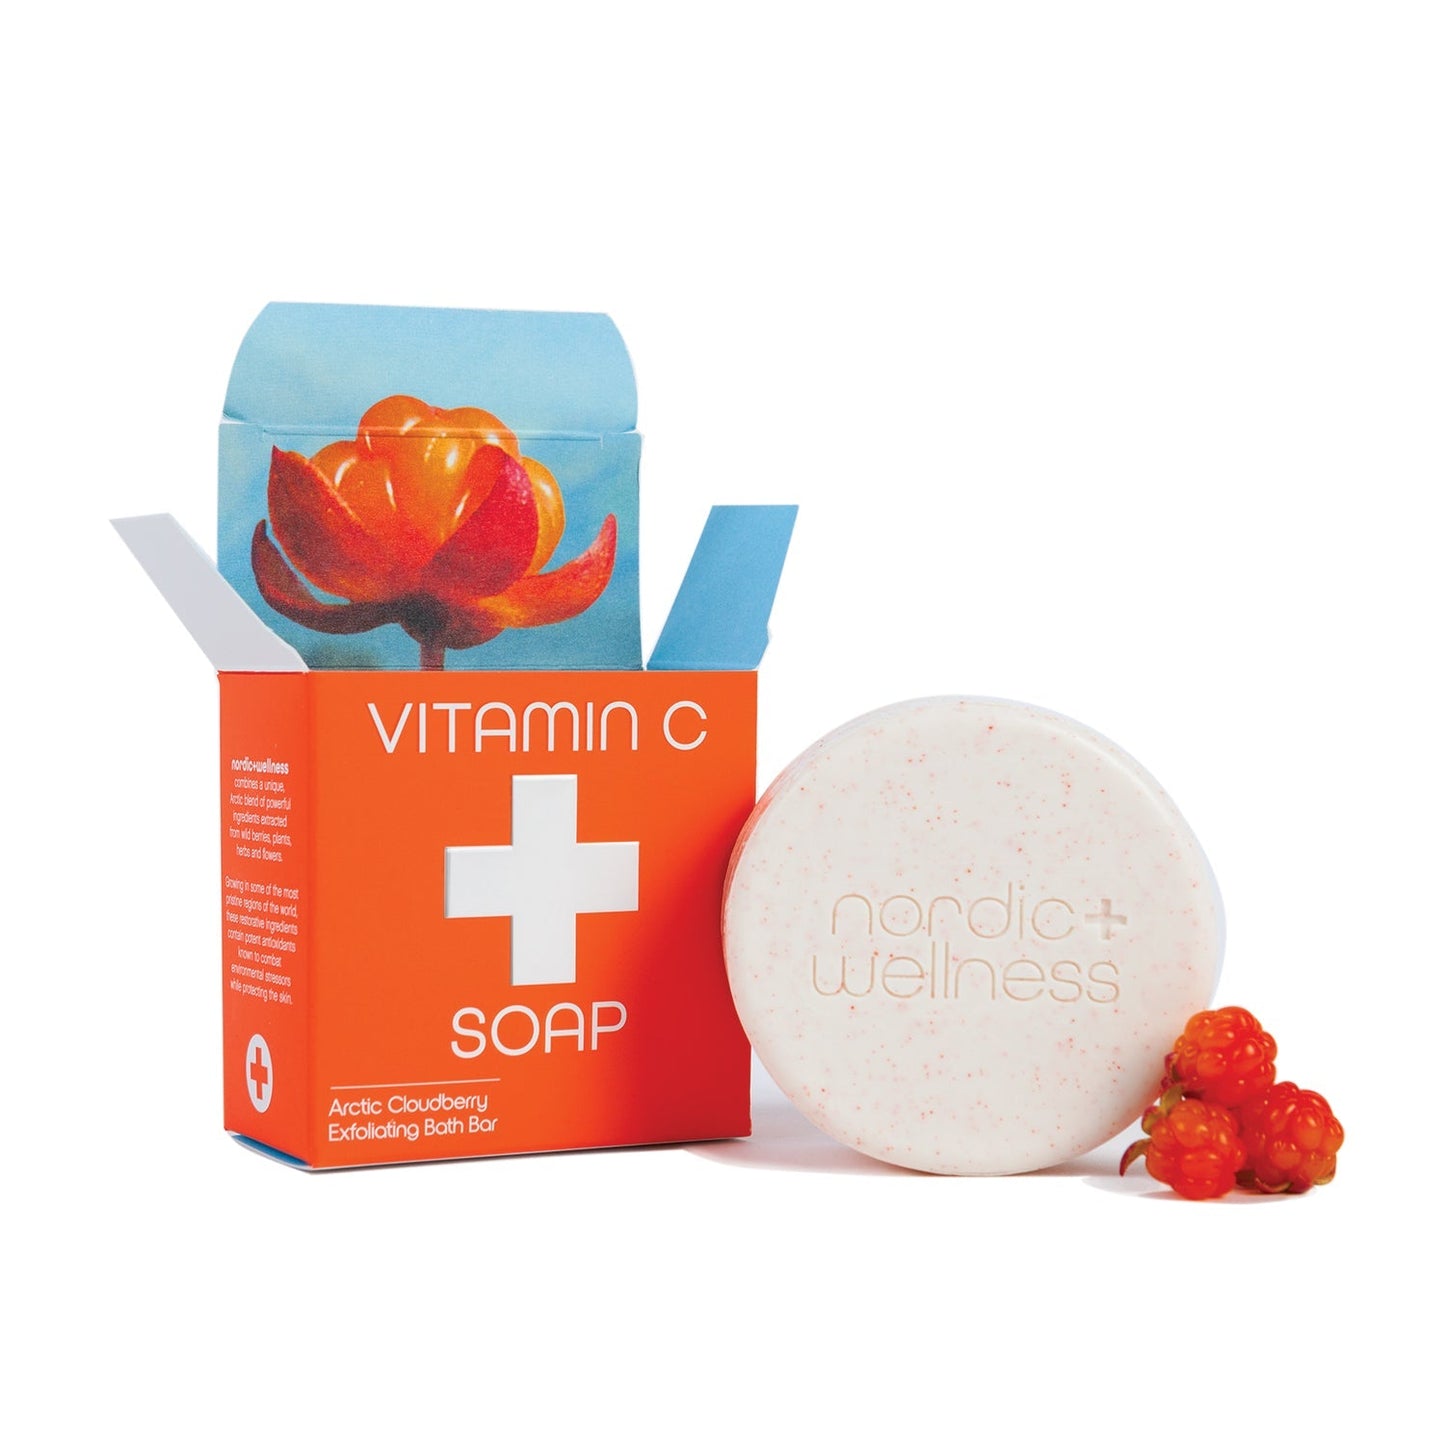 Kalastyle - Nordic+Wellness Vitamin C Soap Bar